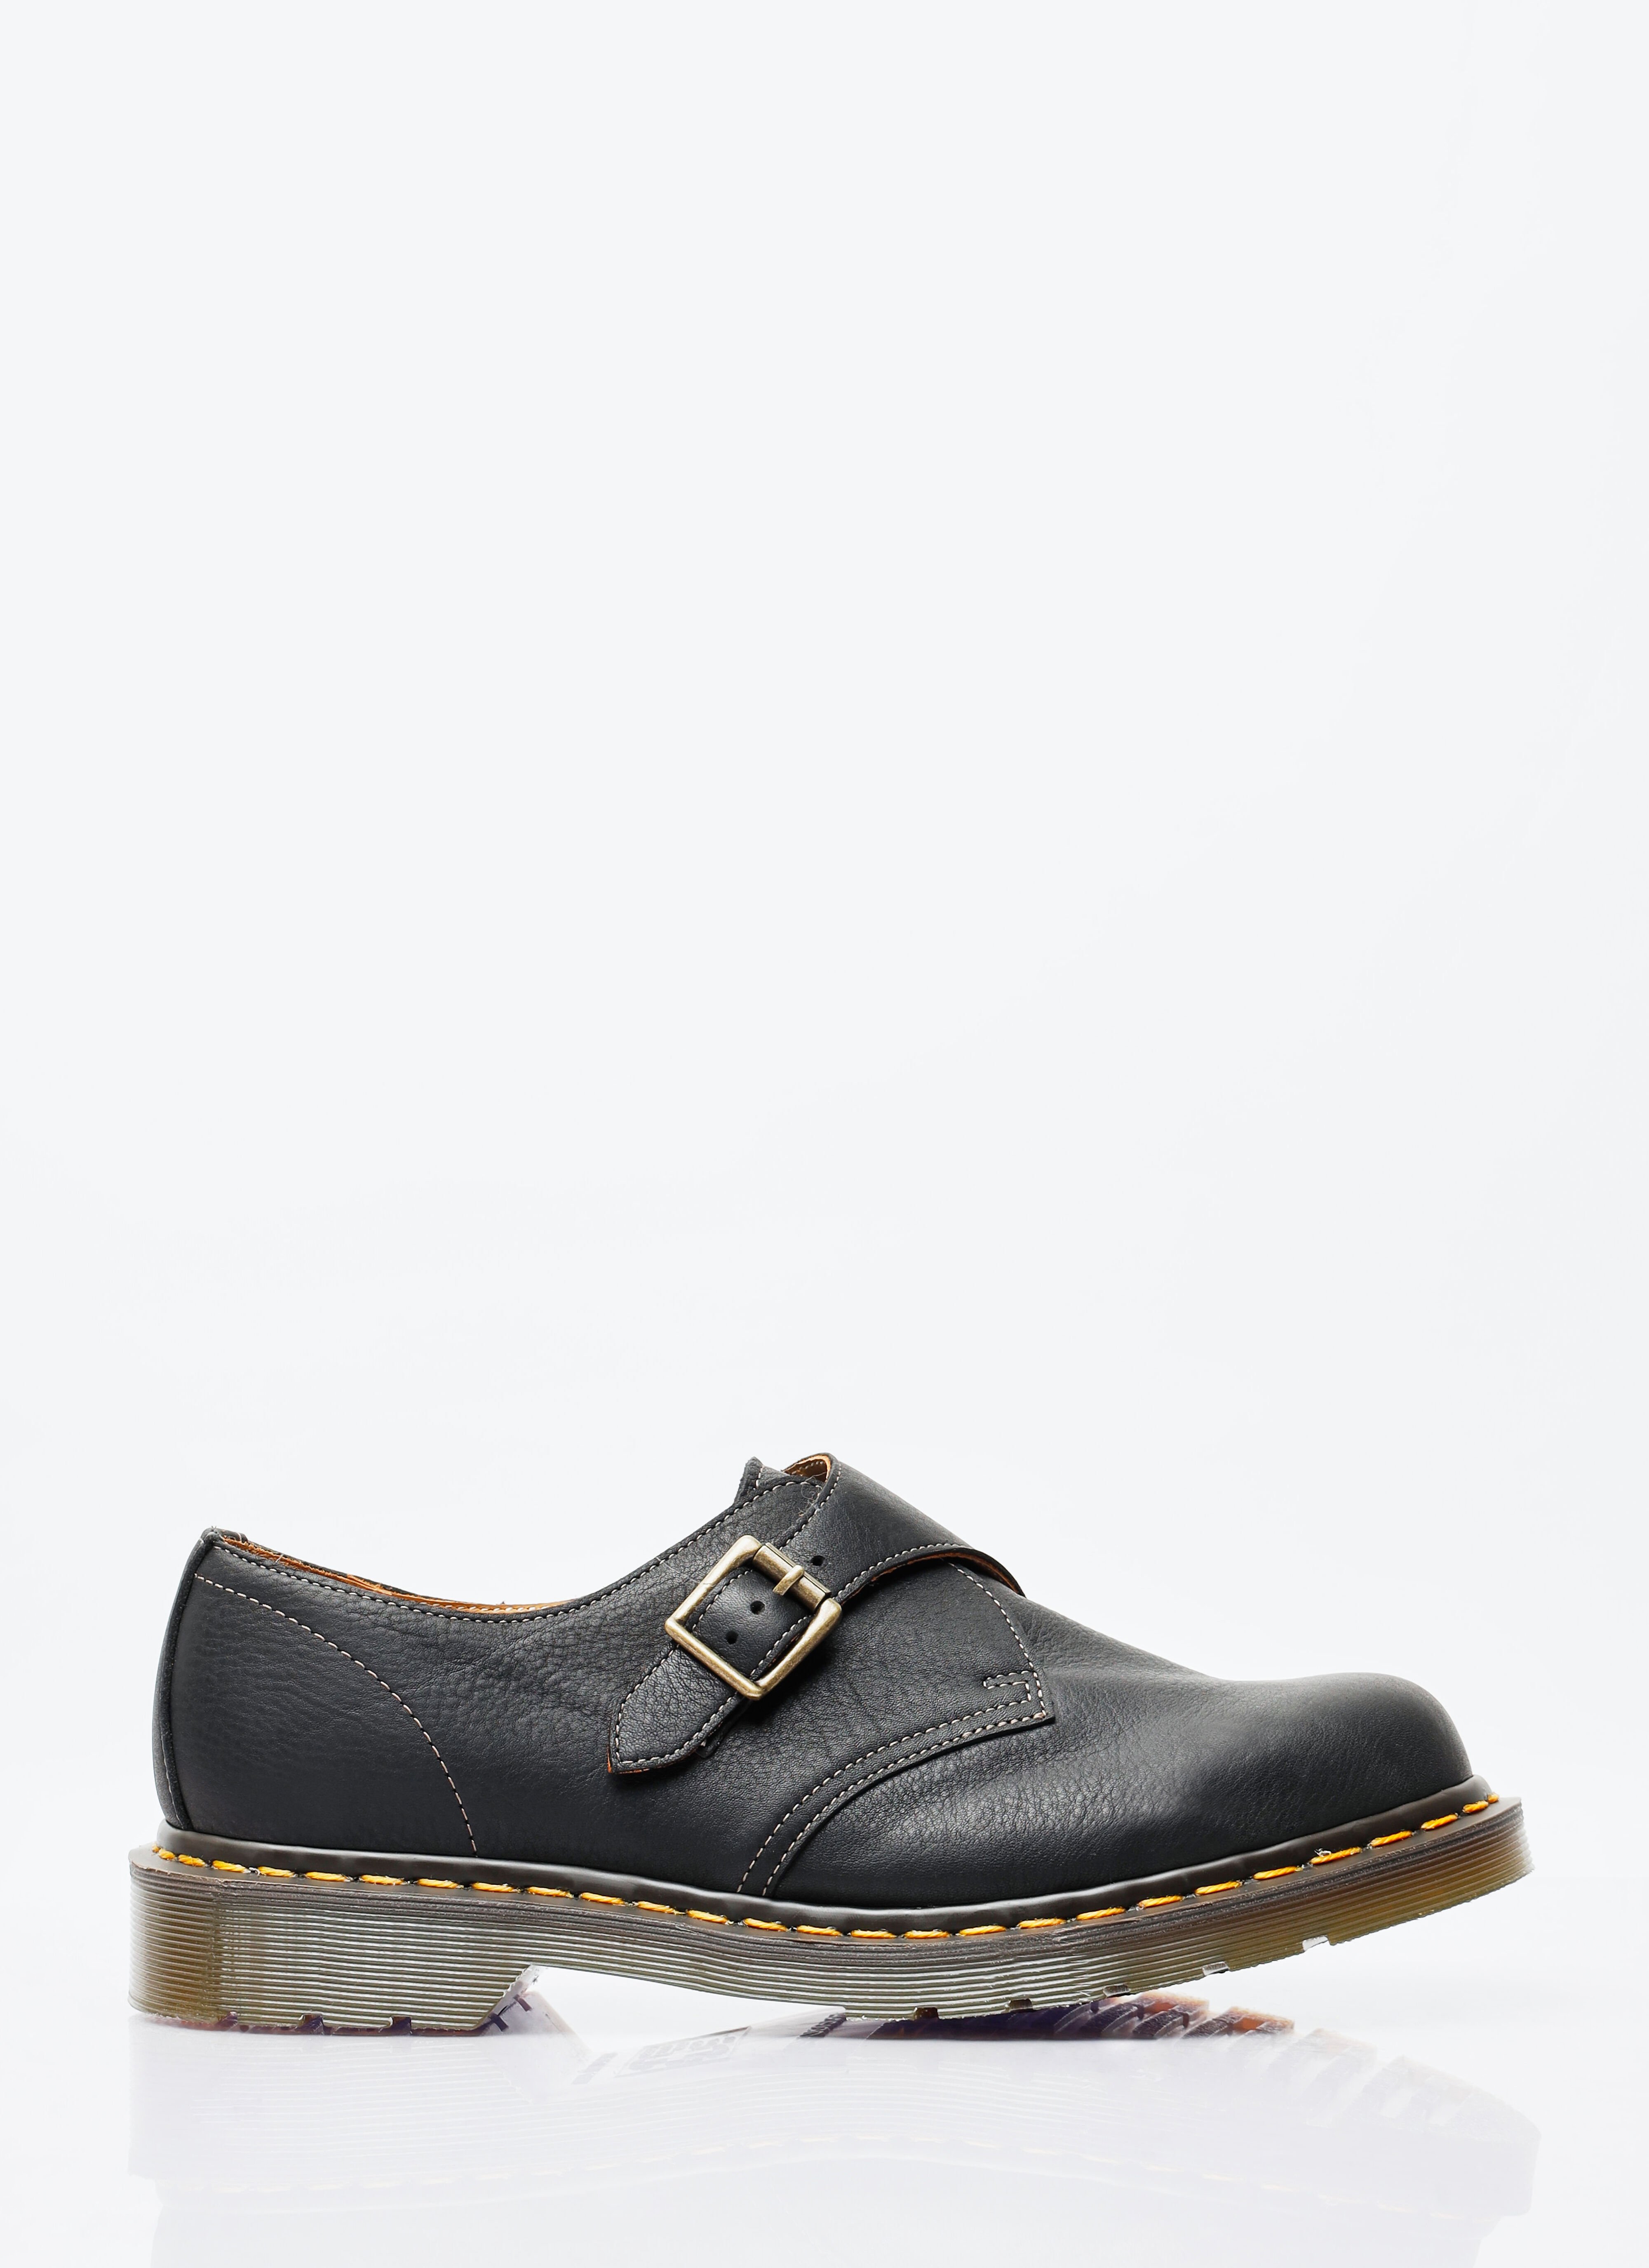 Rick Owens x Dr. Martens 1461 Monk Natural Tumble Leather Shoes Black rod0156002